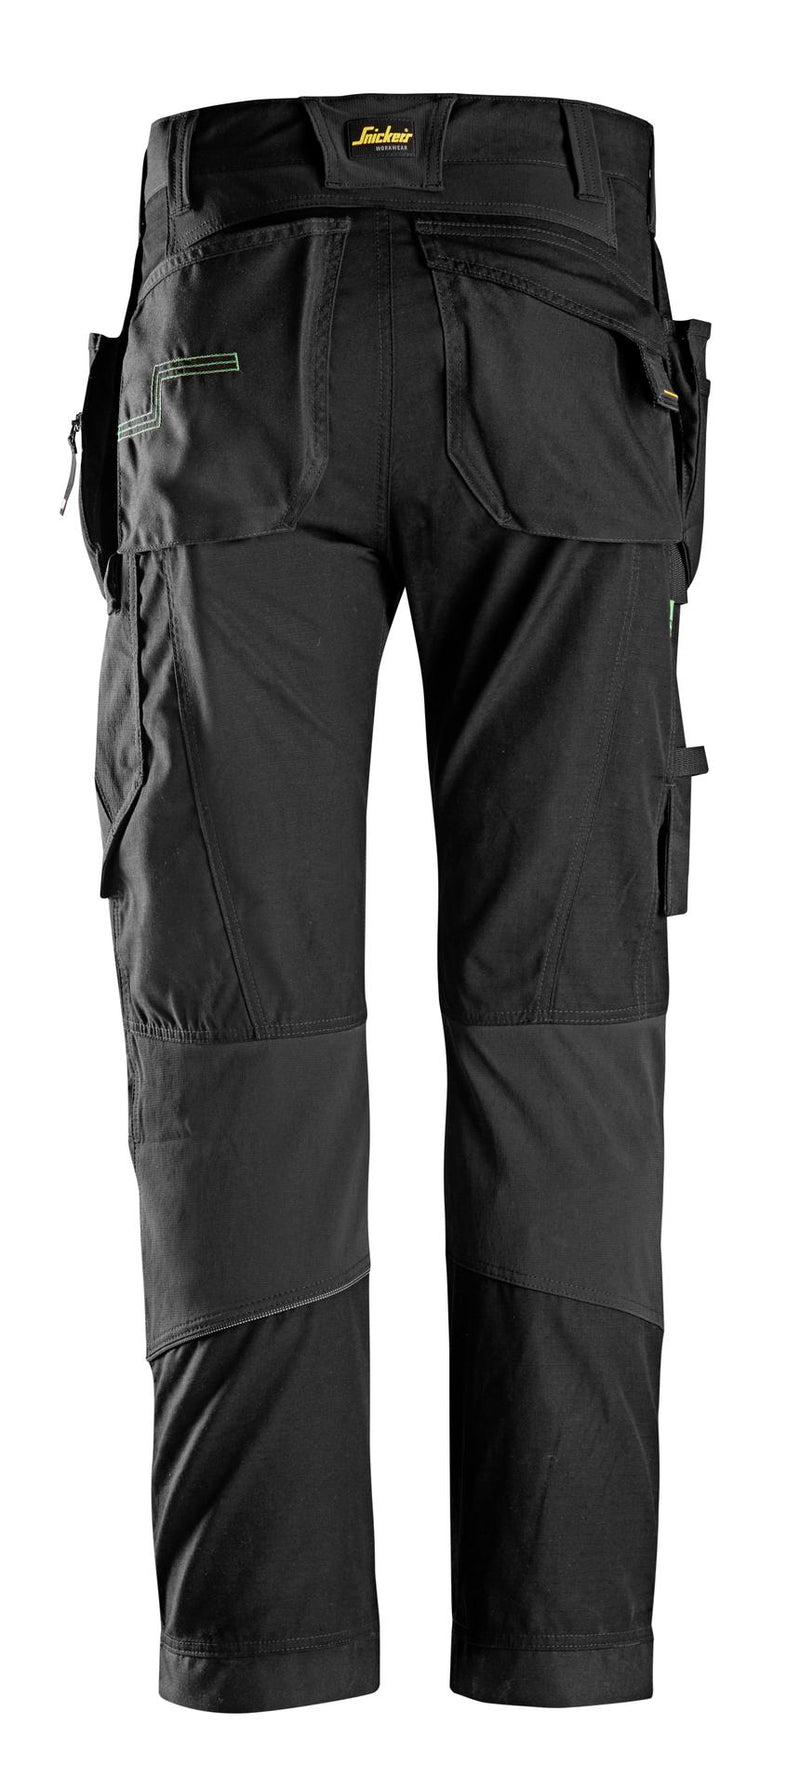 Snickers Workwear 6902 FlexiWork Trousers + Holster Pockets - Black/Black